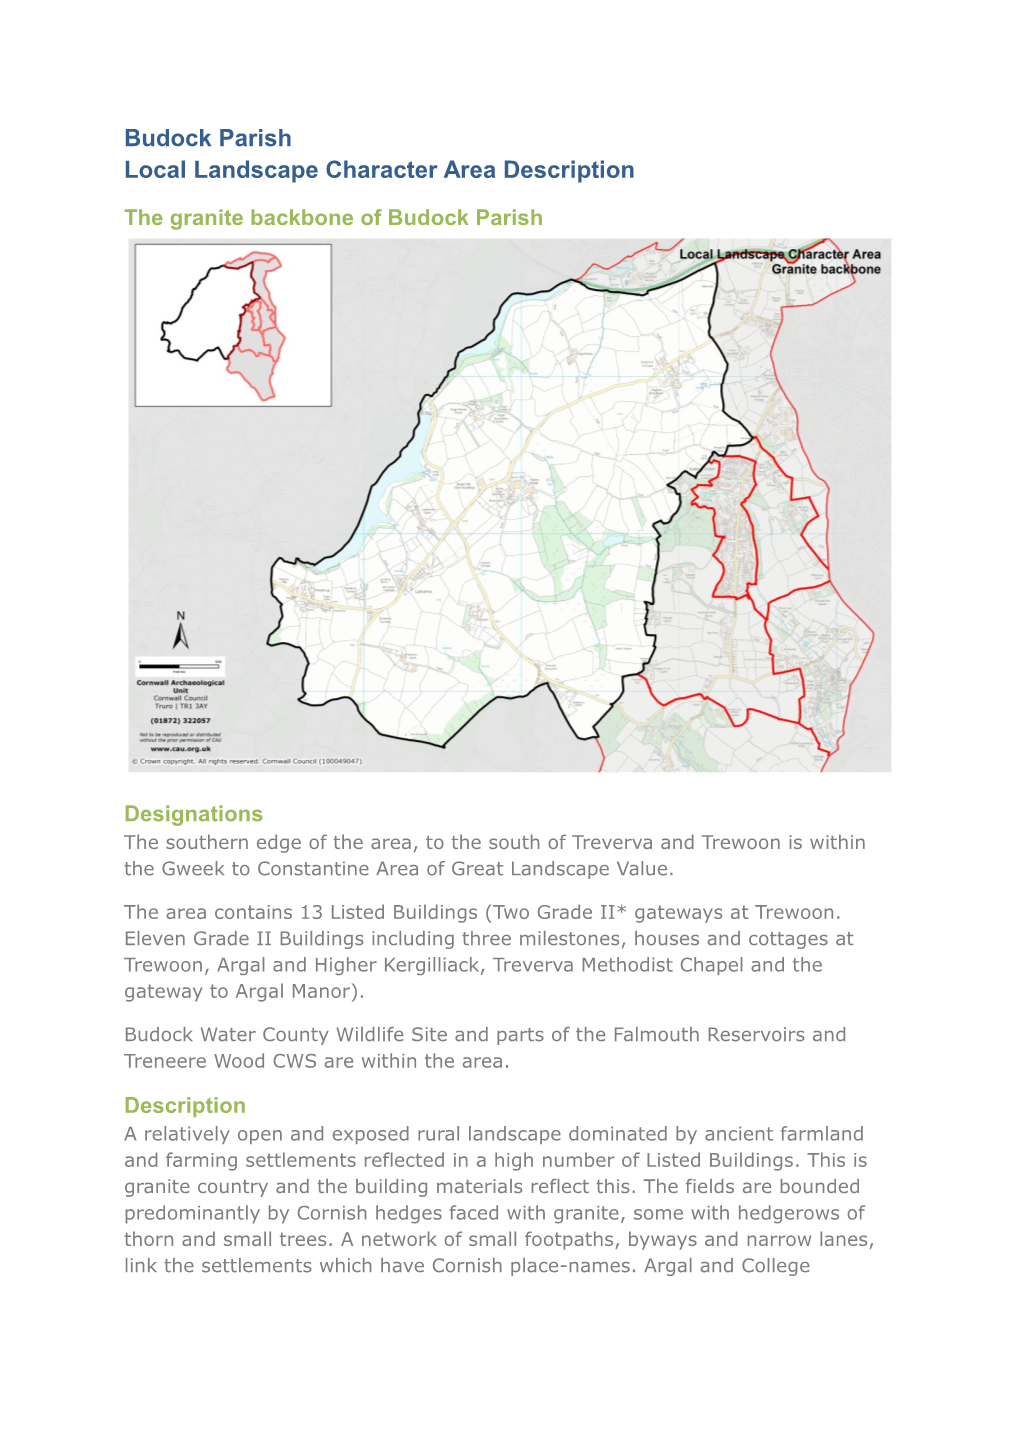 Budock Parish Local Landscape Character Area Description